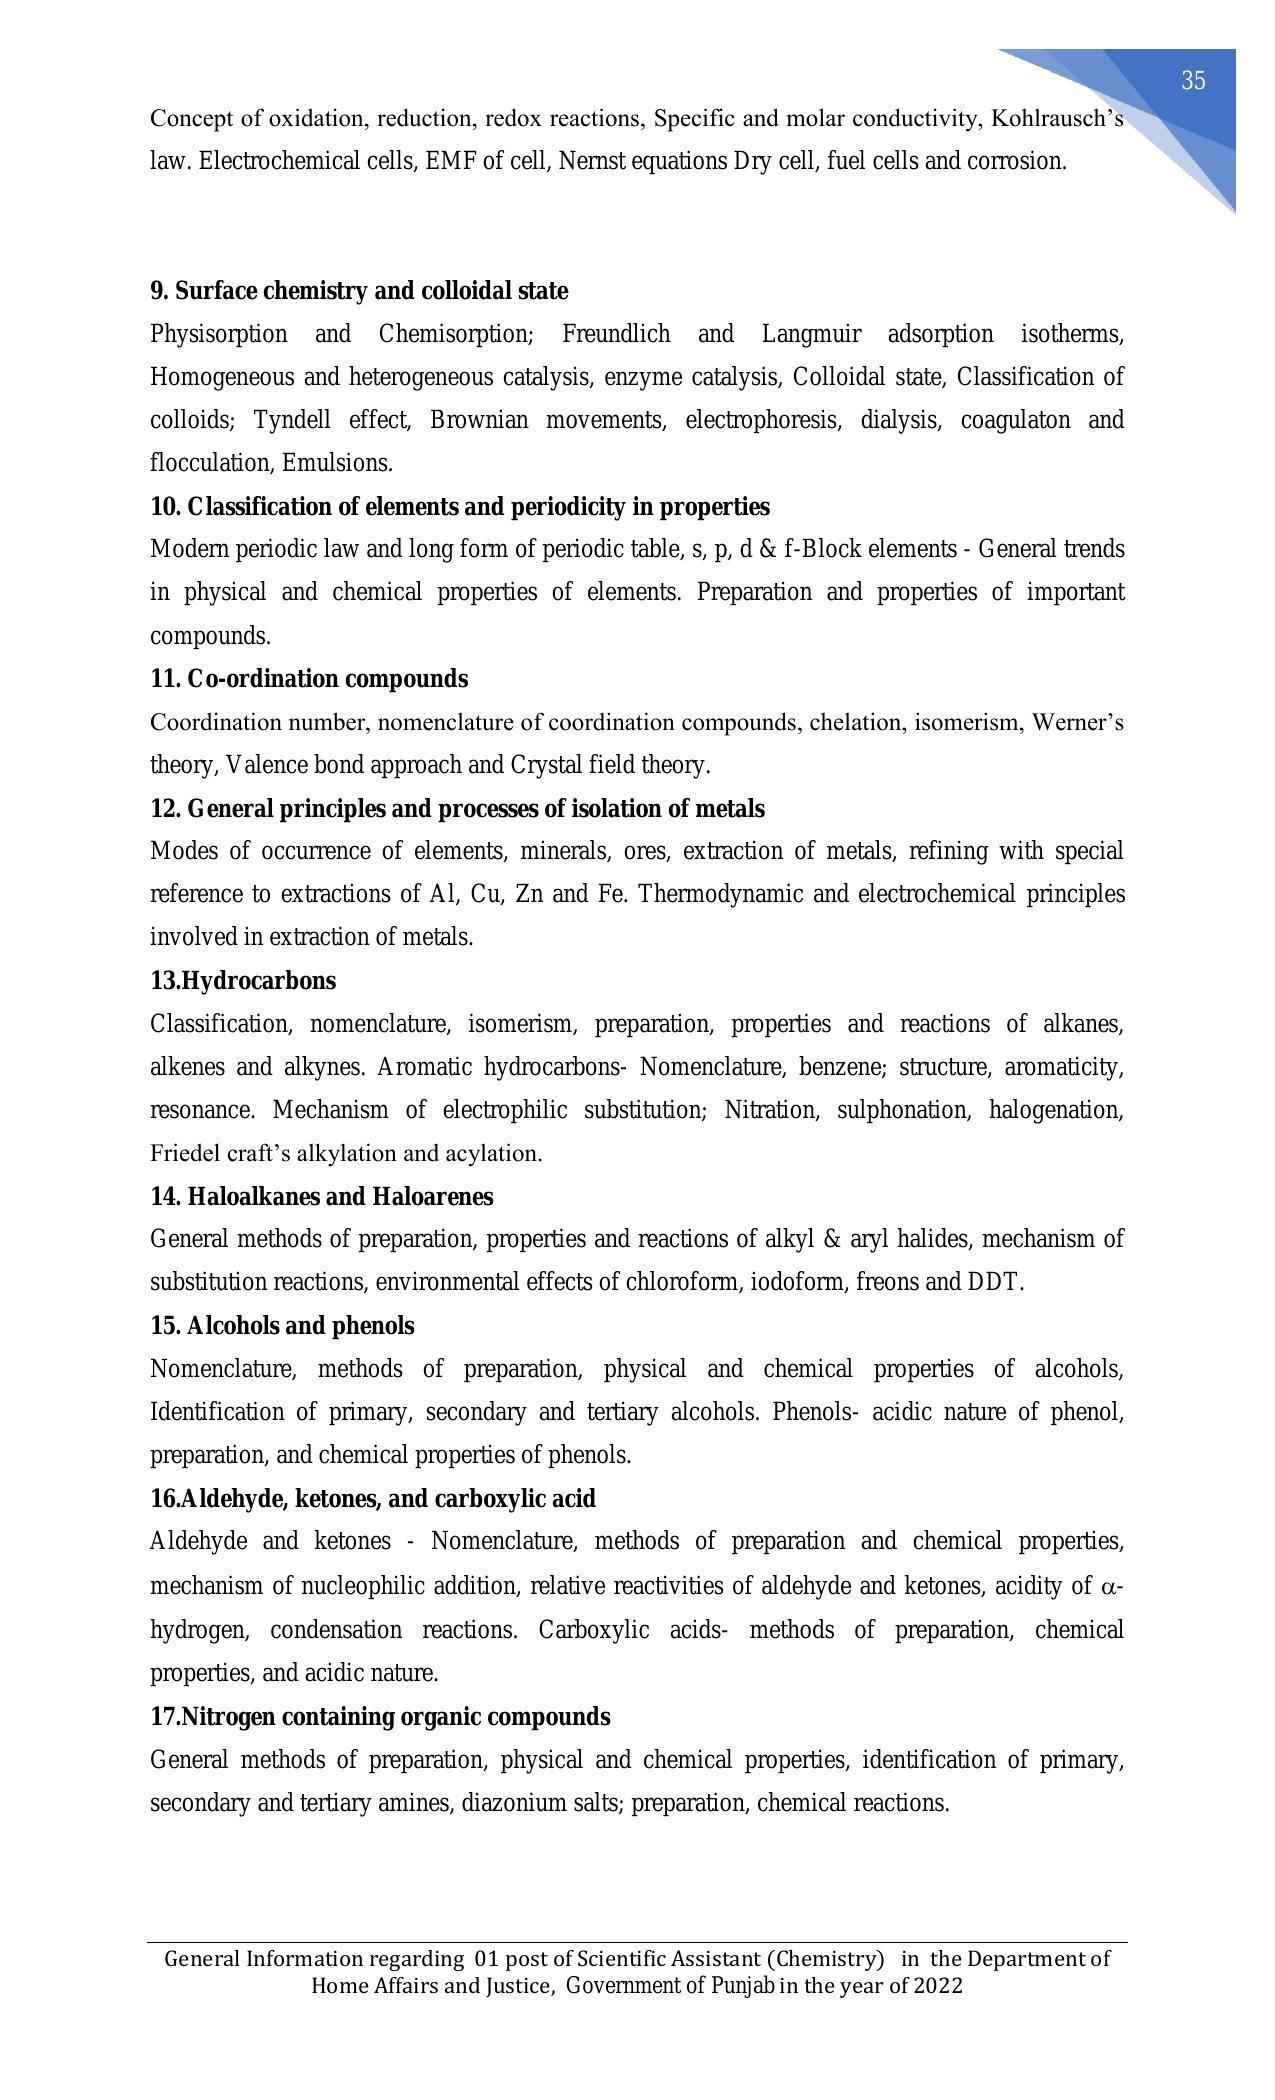 Punjab Public Service Commission Invites Application for Scientific Assistant Recruitment 2022 - Page 33